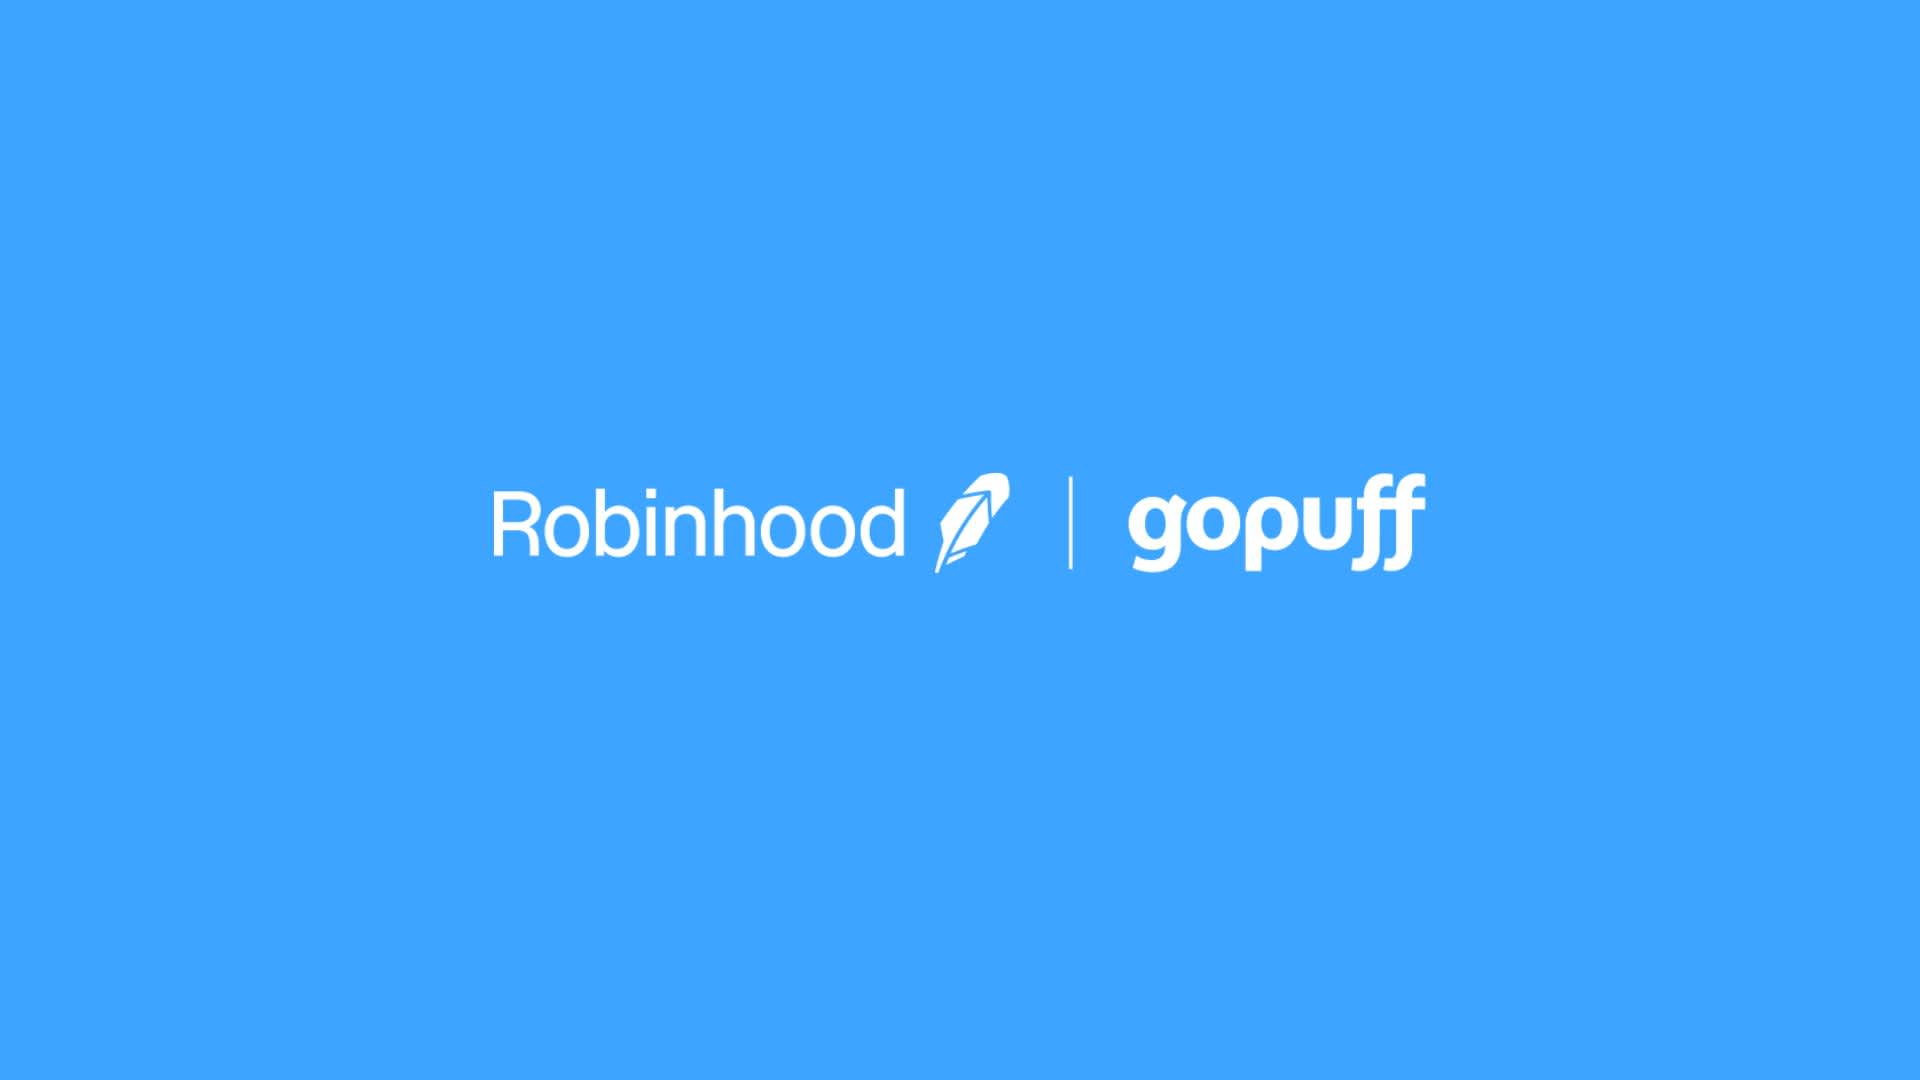 Robinhood and Gopuff logo lockup